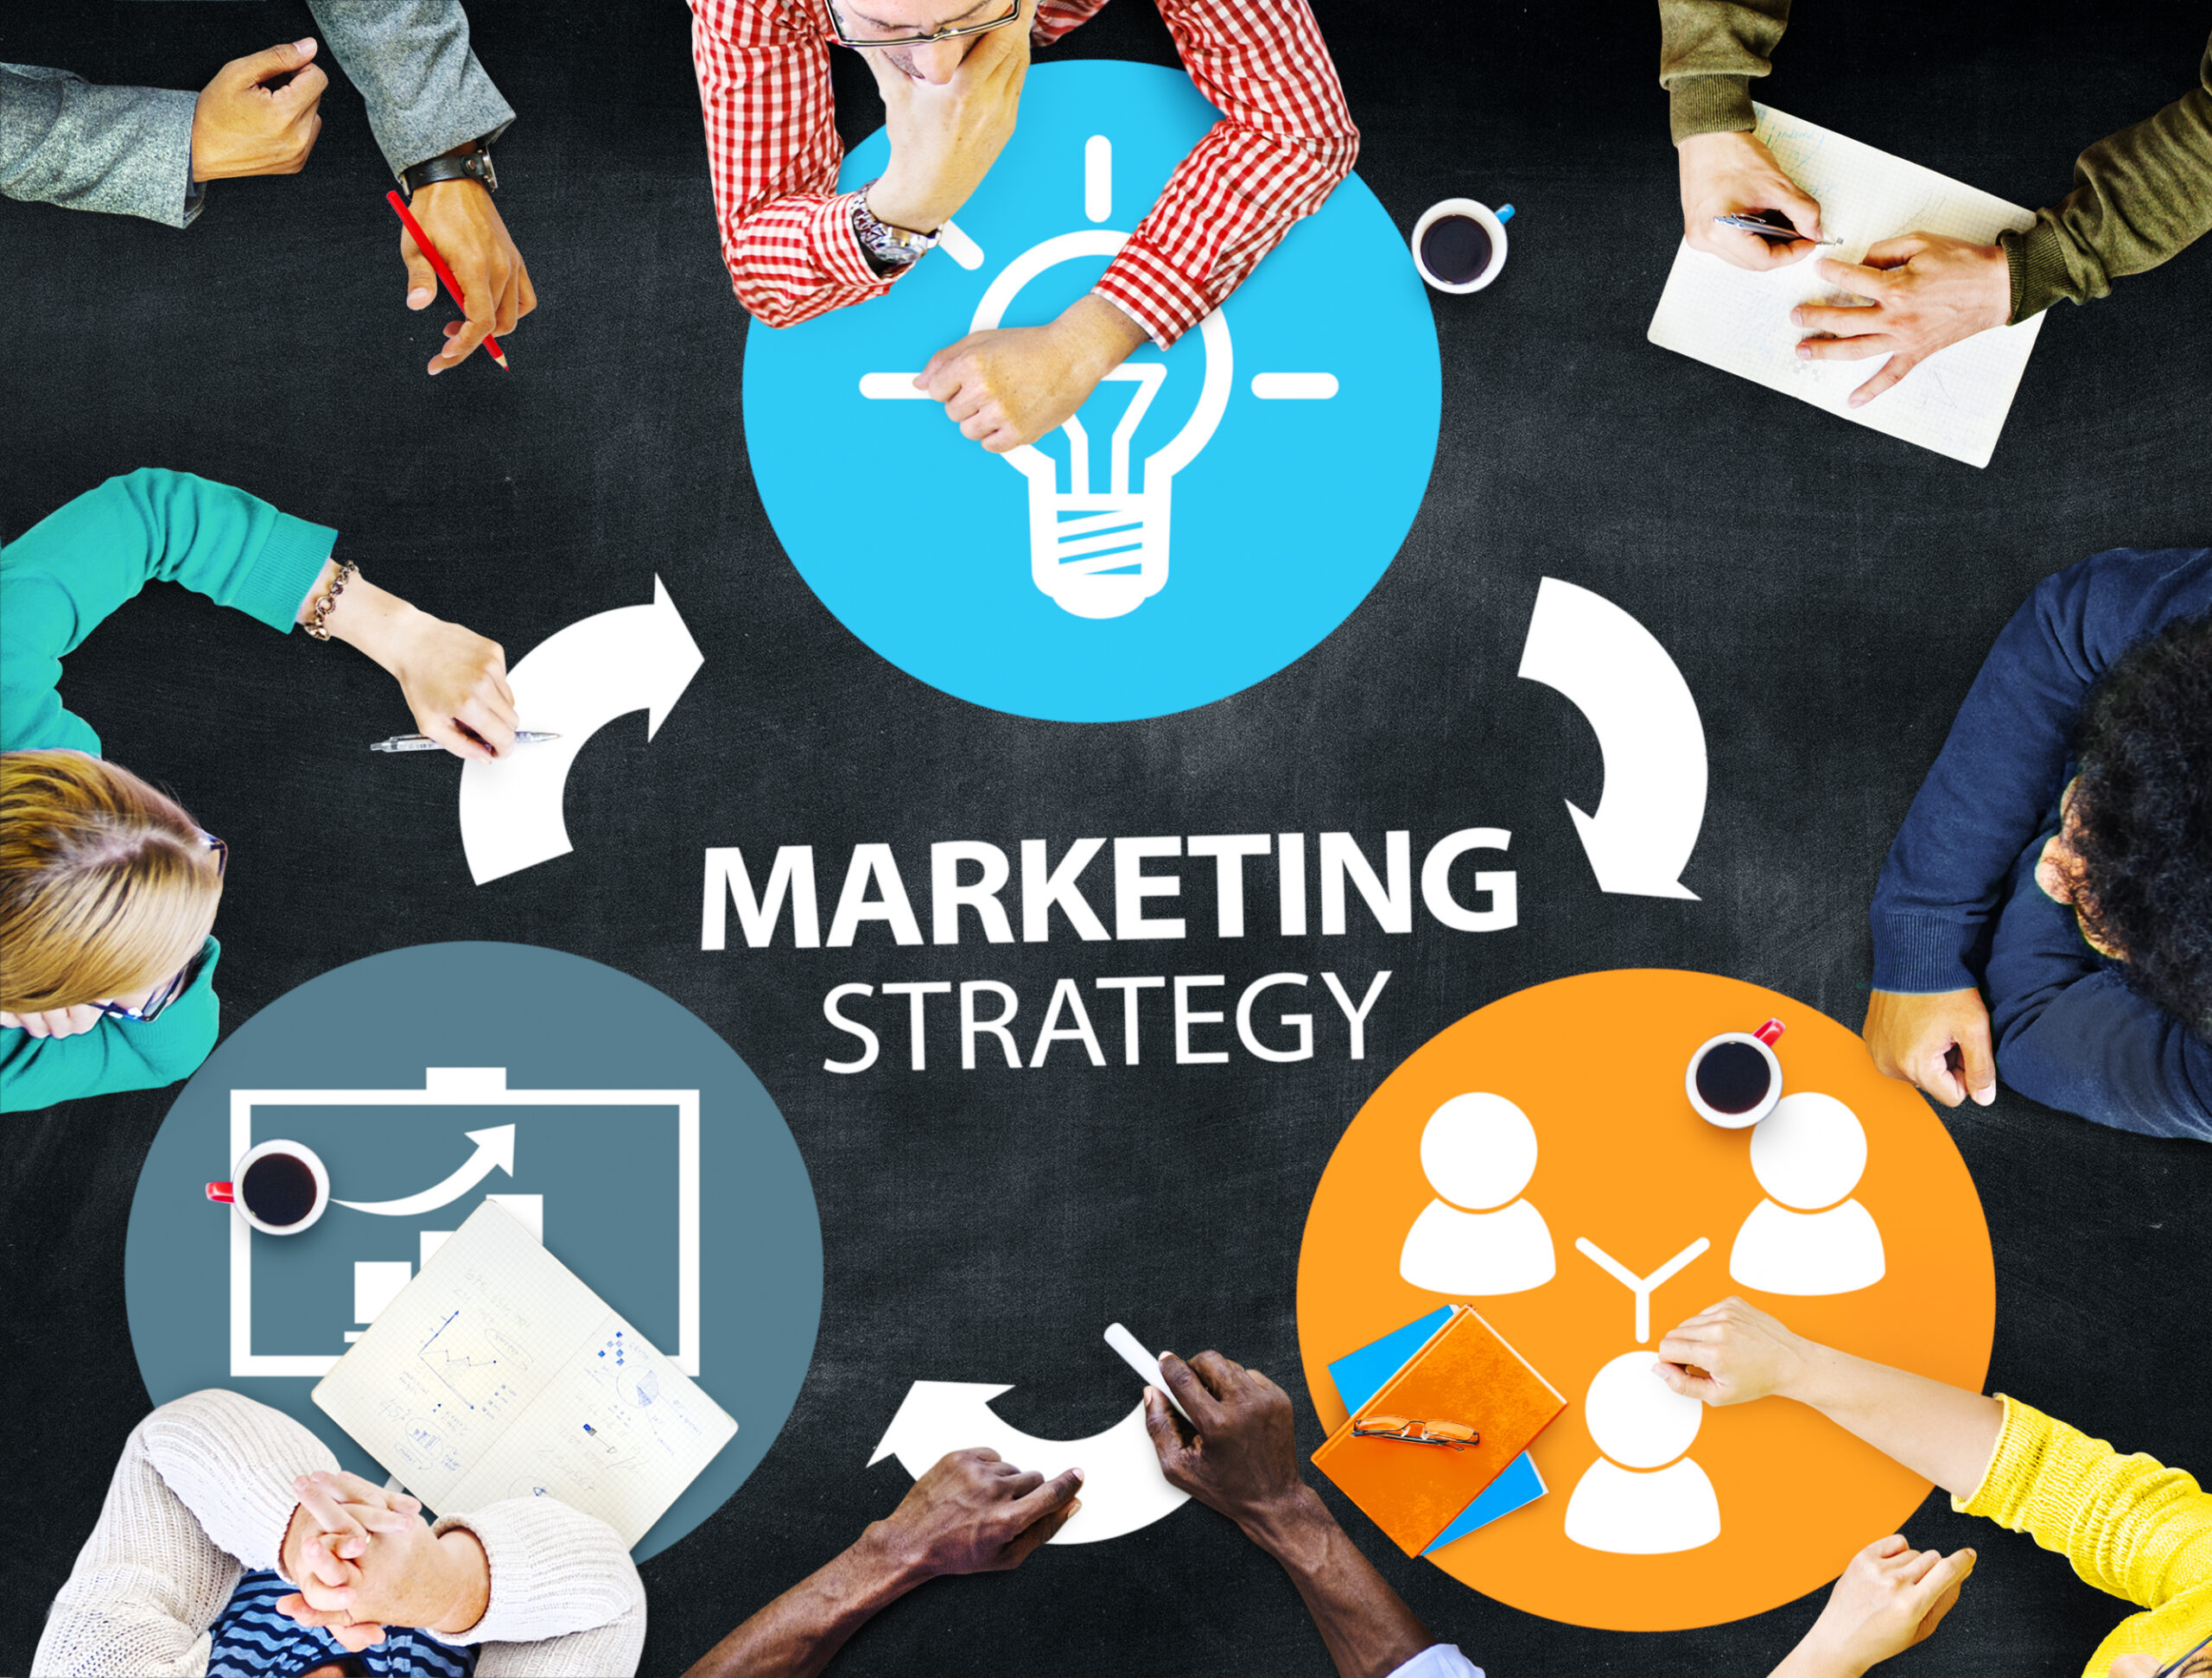 Маркетинговое обучение. Стратегии маркетинга. Стратегический маркетинг. Составление маркетинговой стратегии. Разработка стратегии маркетинга.